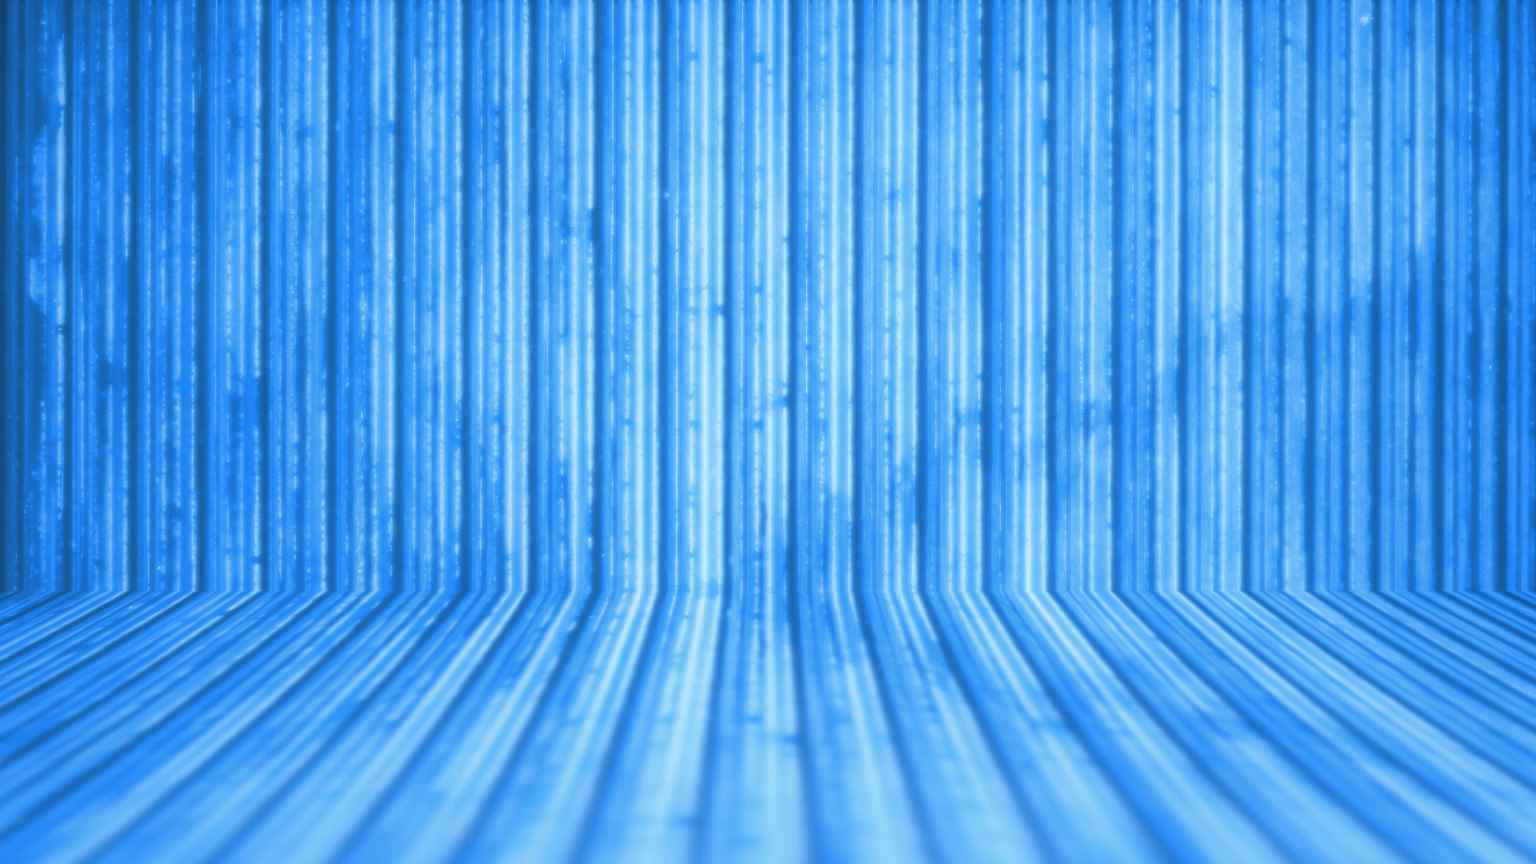 4K Light Blue Motion Background || VFX Free To Use 4K Screensaver || FREE DOWNLOAD